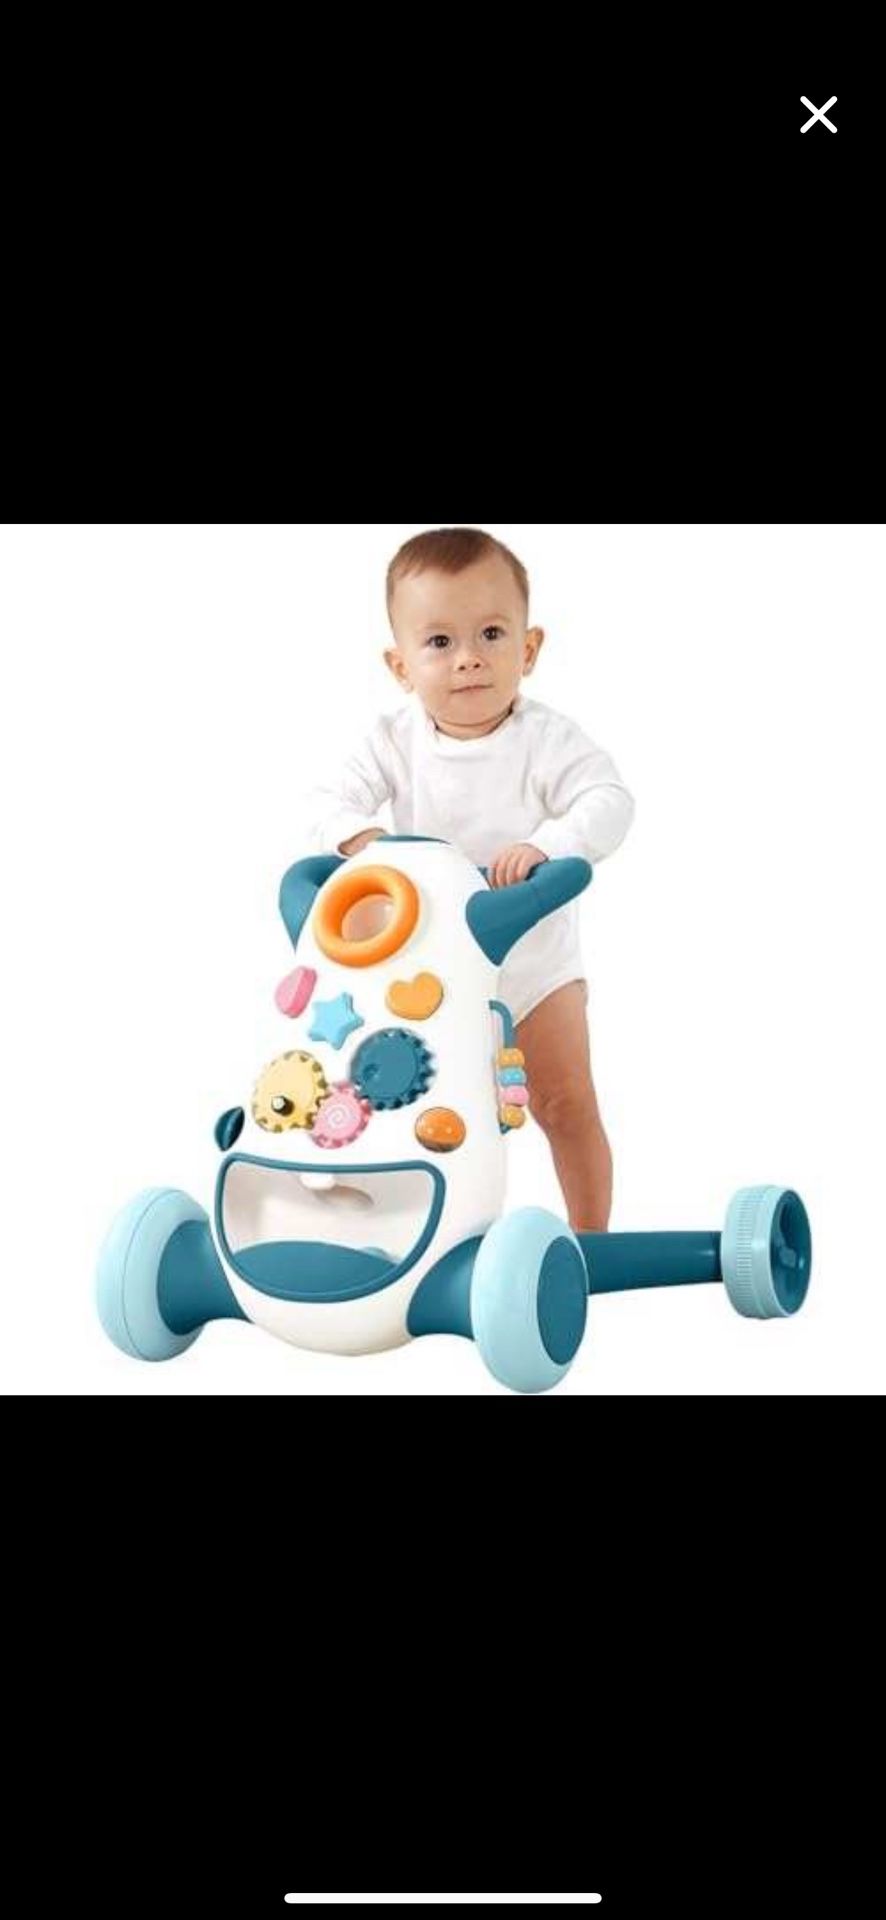 KUB Baby & Toddler Walker Push Toy, Interactive Sound & Light 